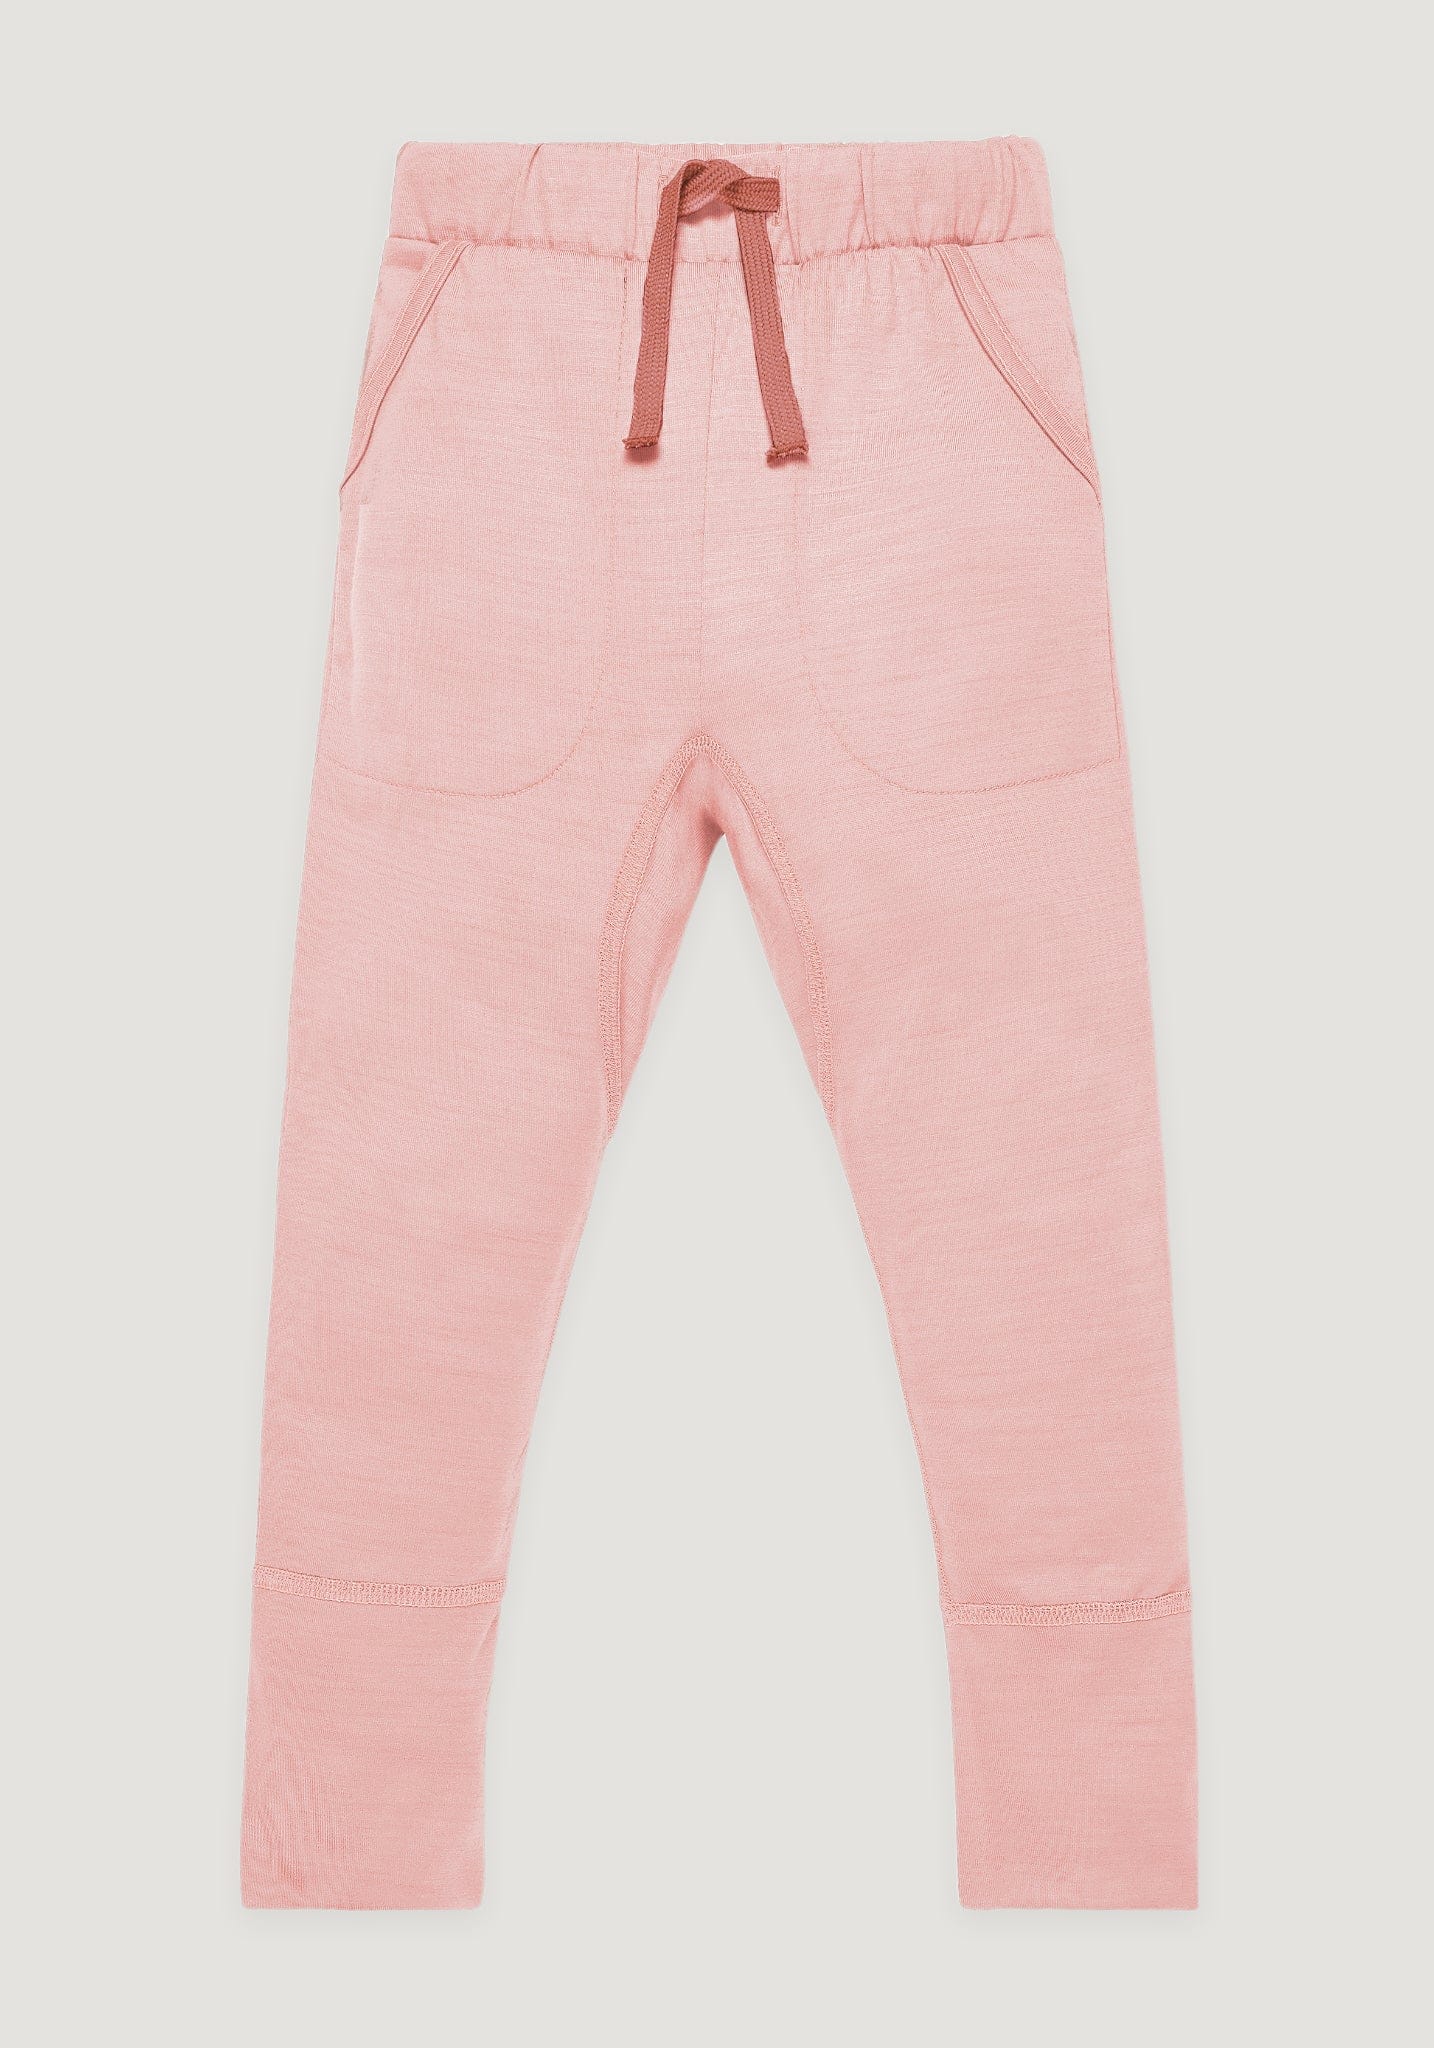 Pantaloni lână merinos super fină - 24/7 Pink Peach Blossom Smalls HipHip.ro